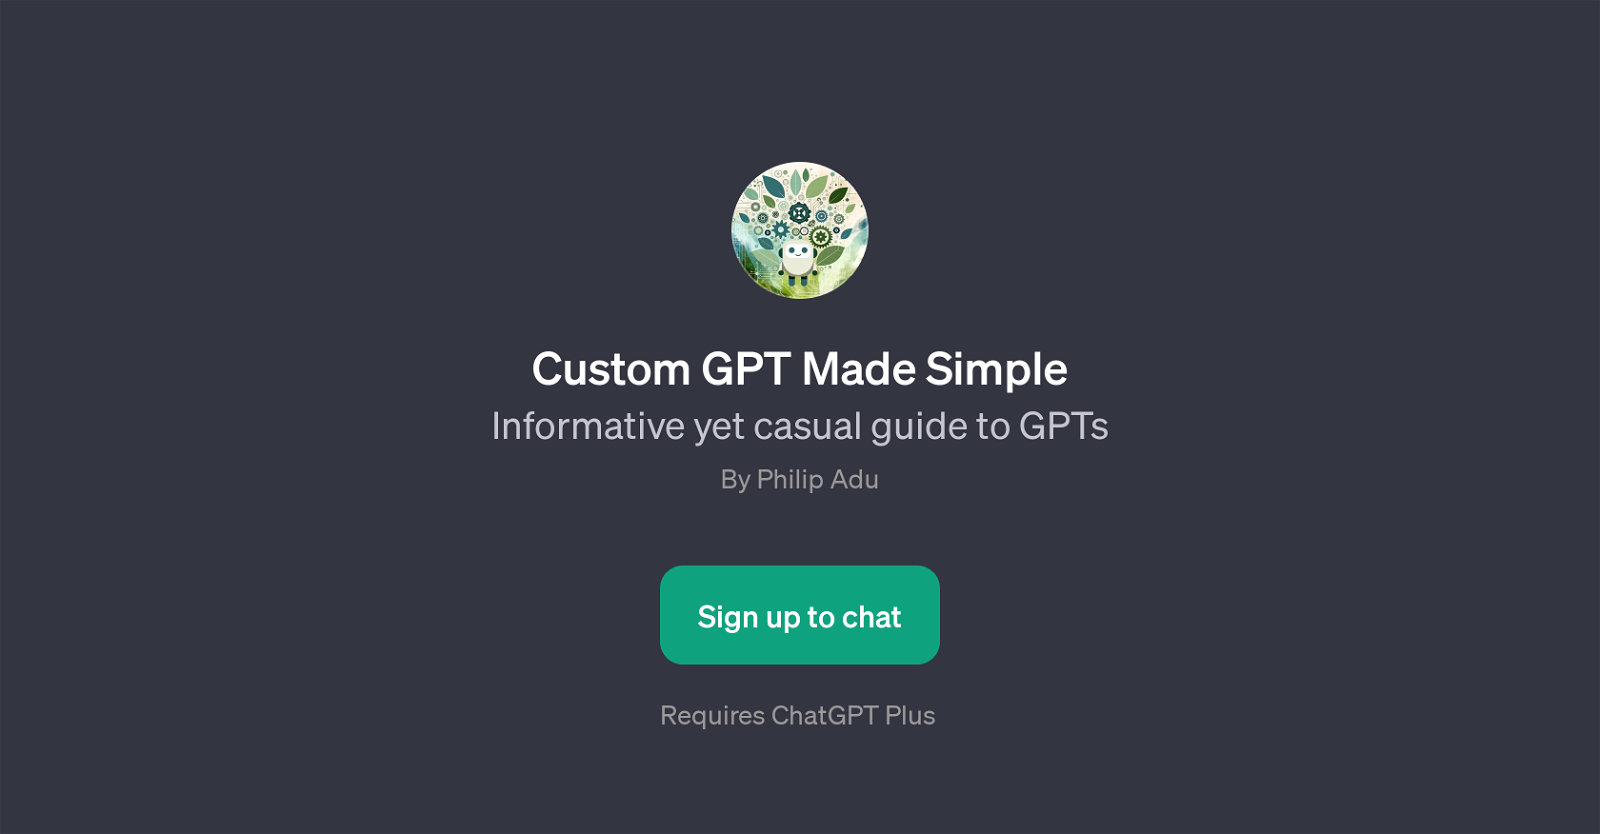 Custom GPT Made Simple website